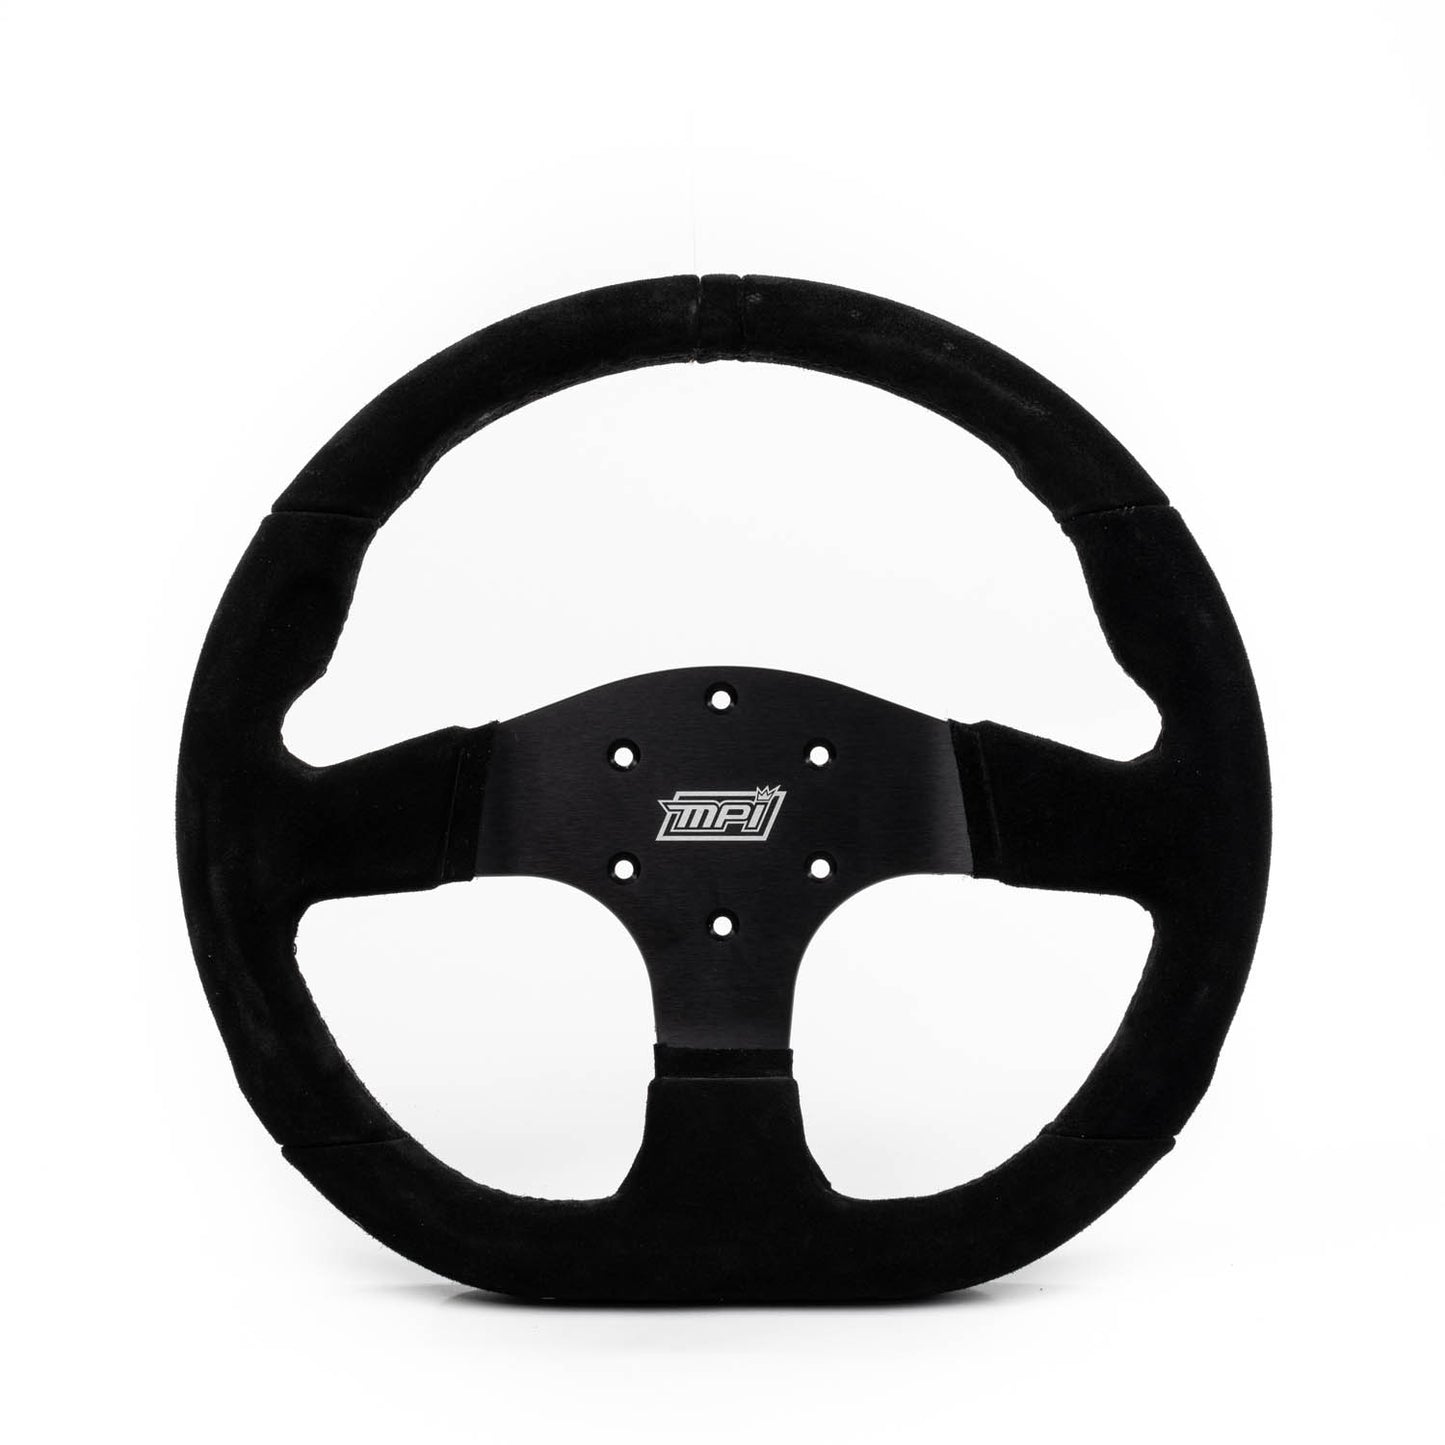 Touring Steering Wheel 13in Full Black D Shaped